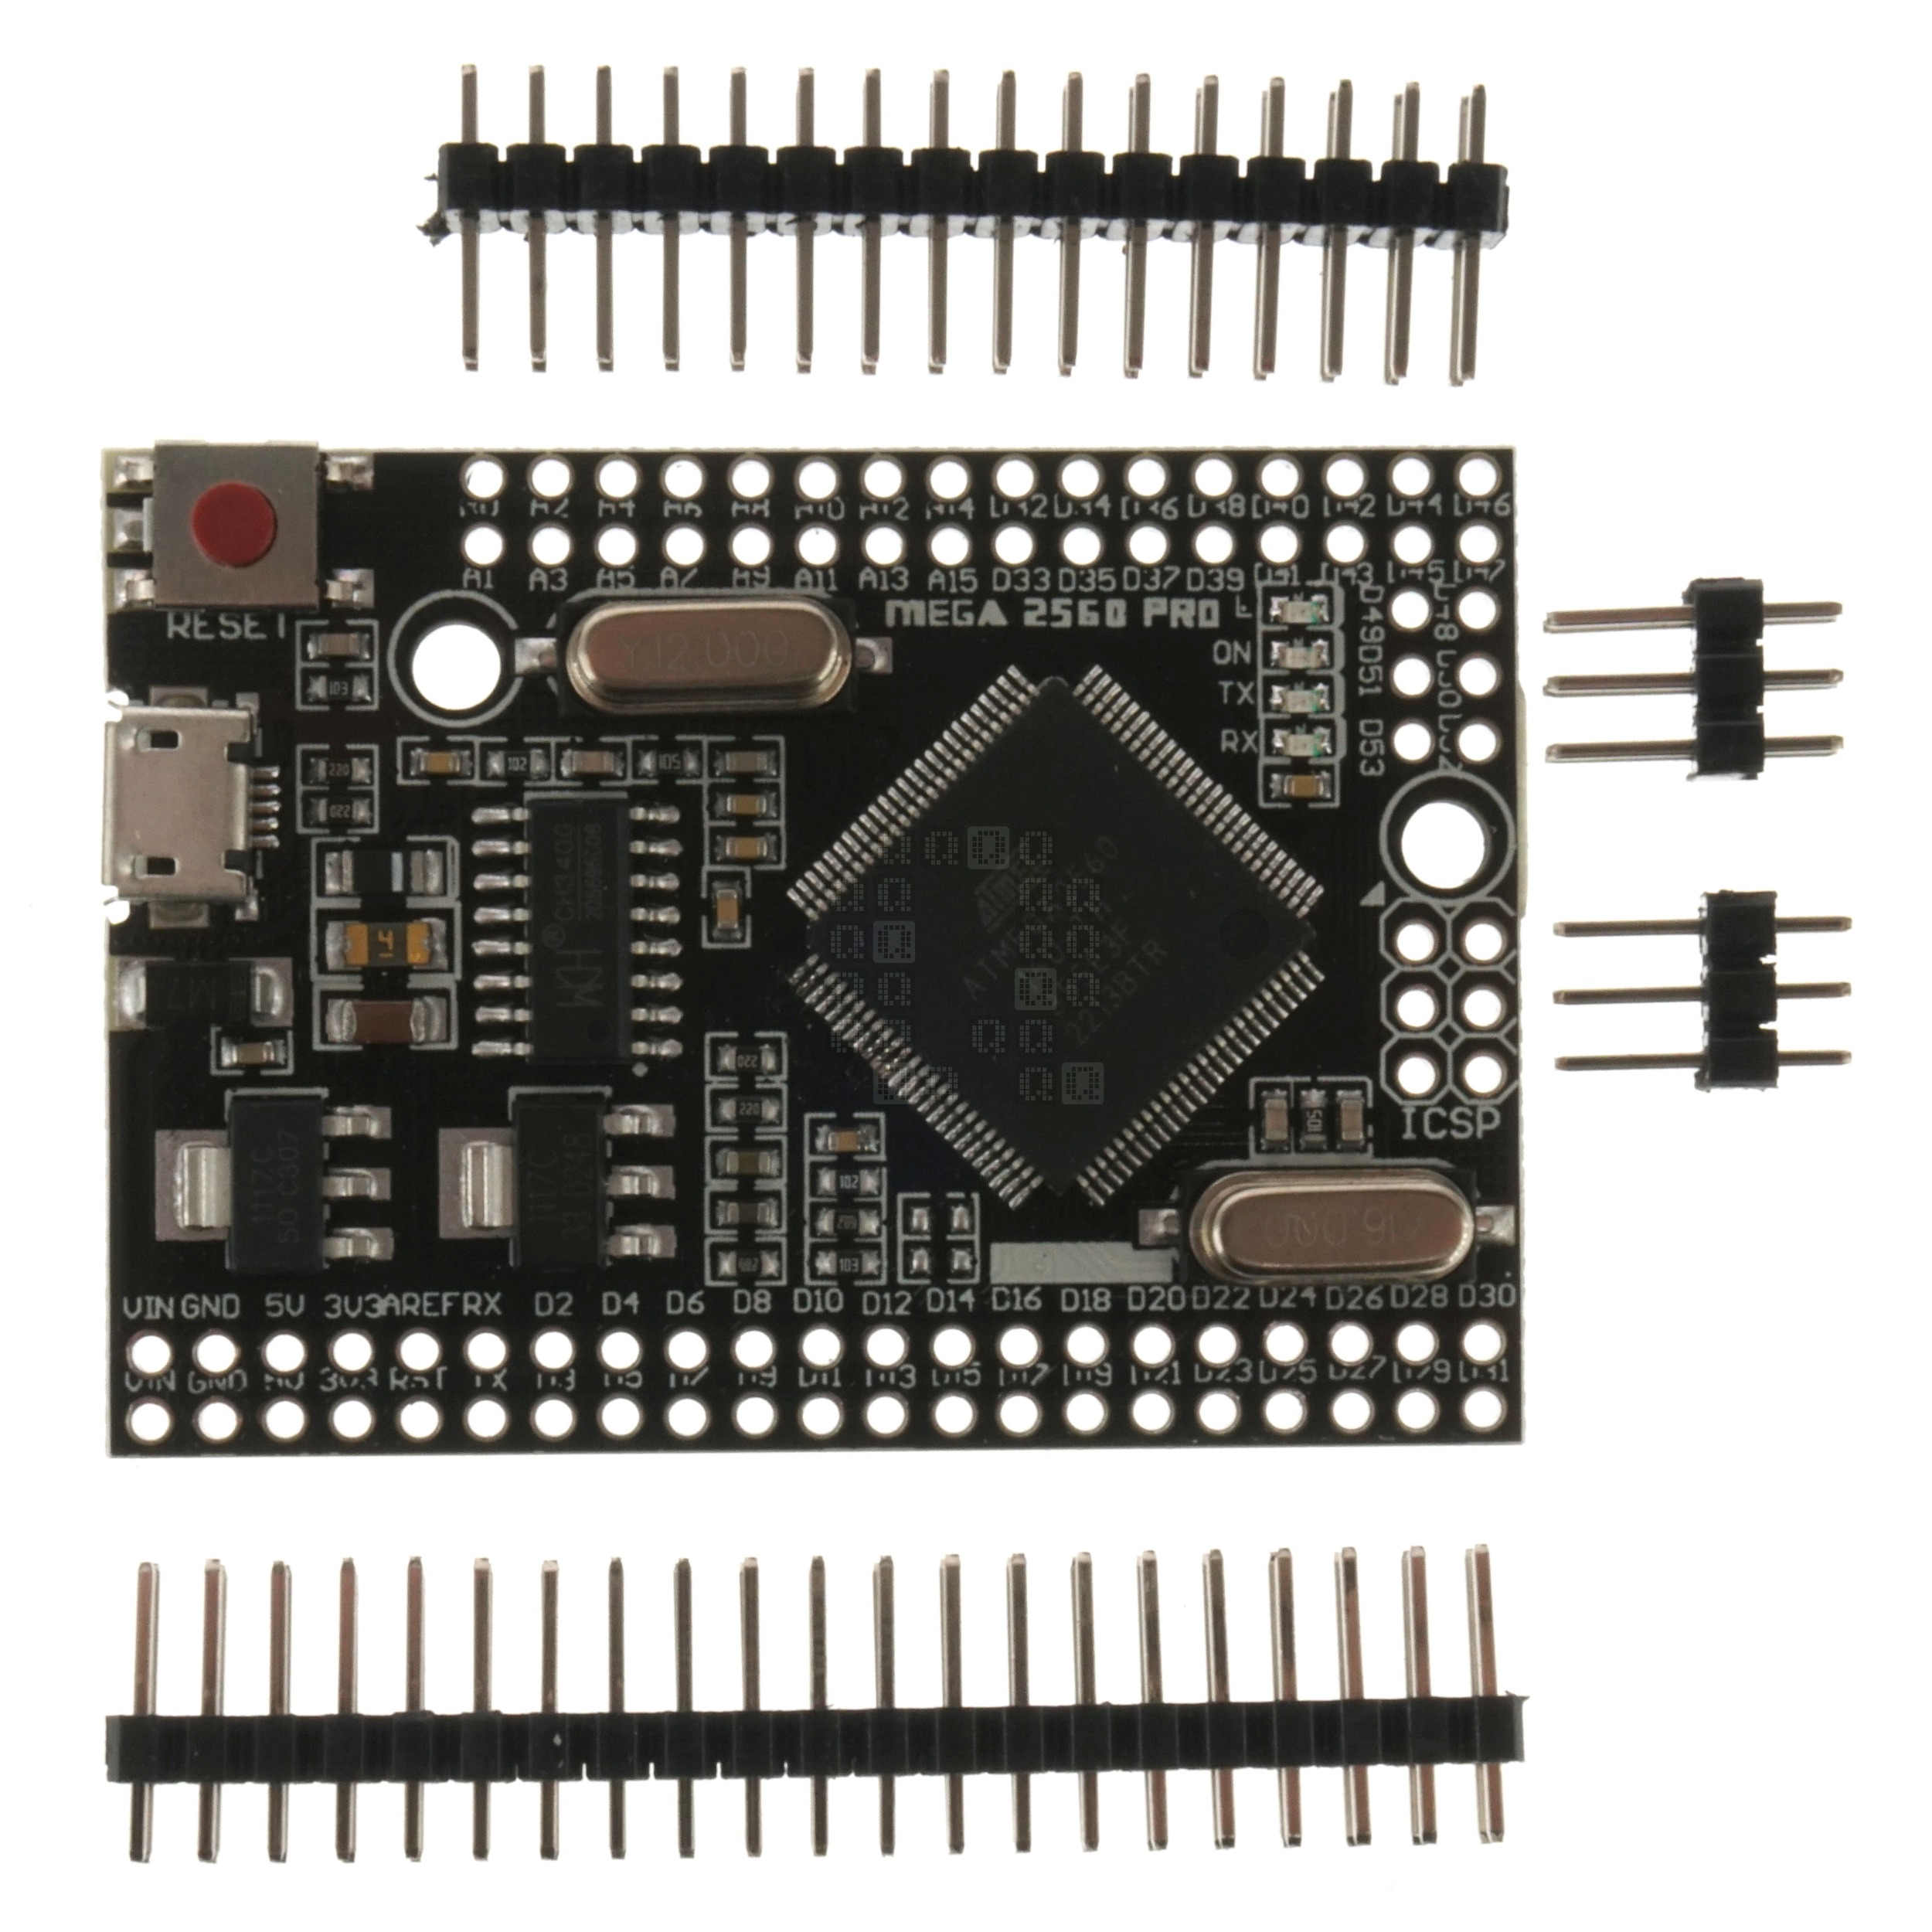 MEGA 2560 Pro Microcontroller Black Circuit Board with Male Pin Headers, CH340G / ATMEGA2560-16AU